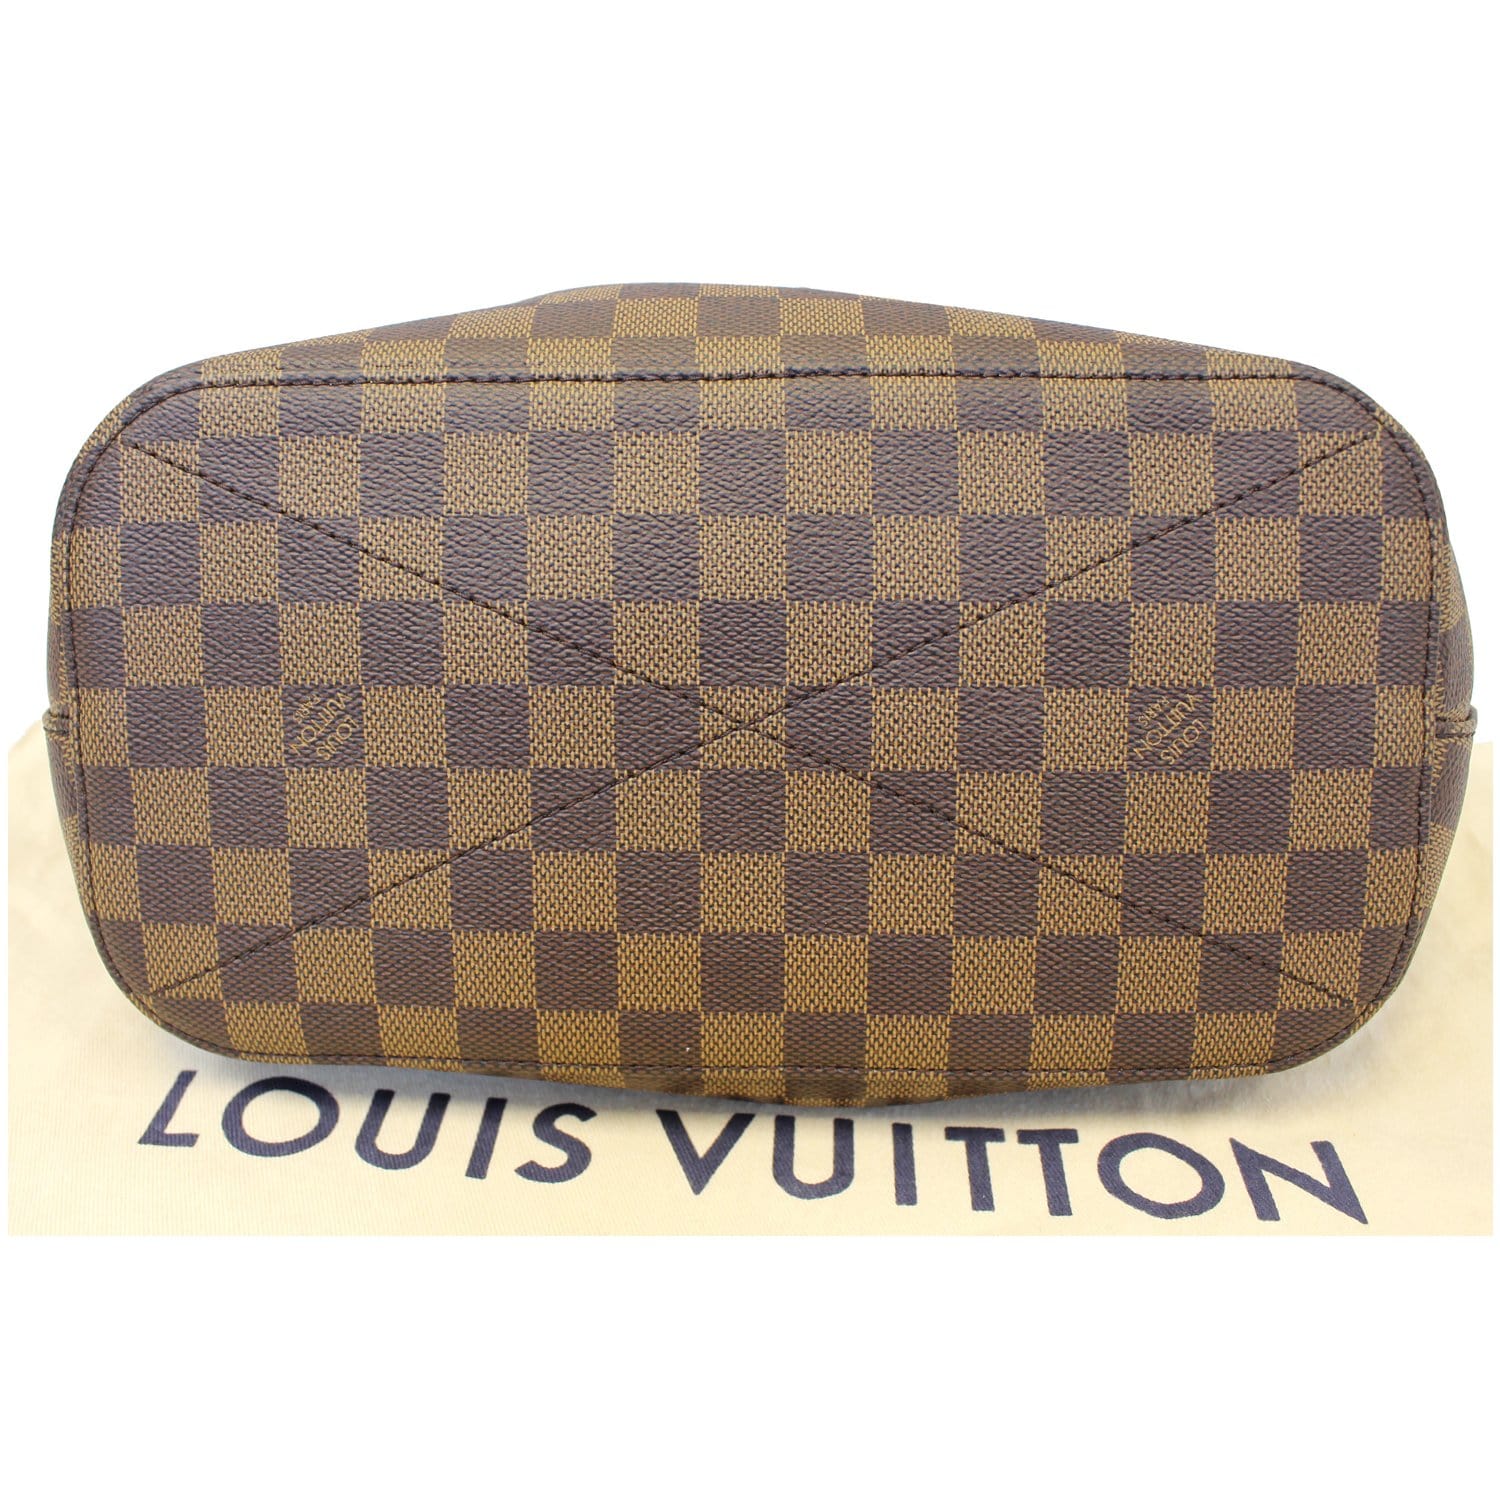 Louis Vuitton Siena Damier Ebene Gm with Strap 2way 14lk1206 Brown